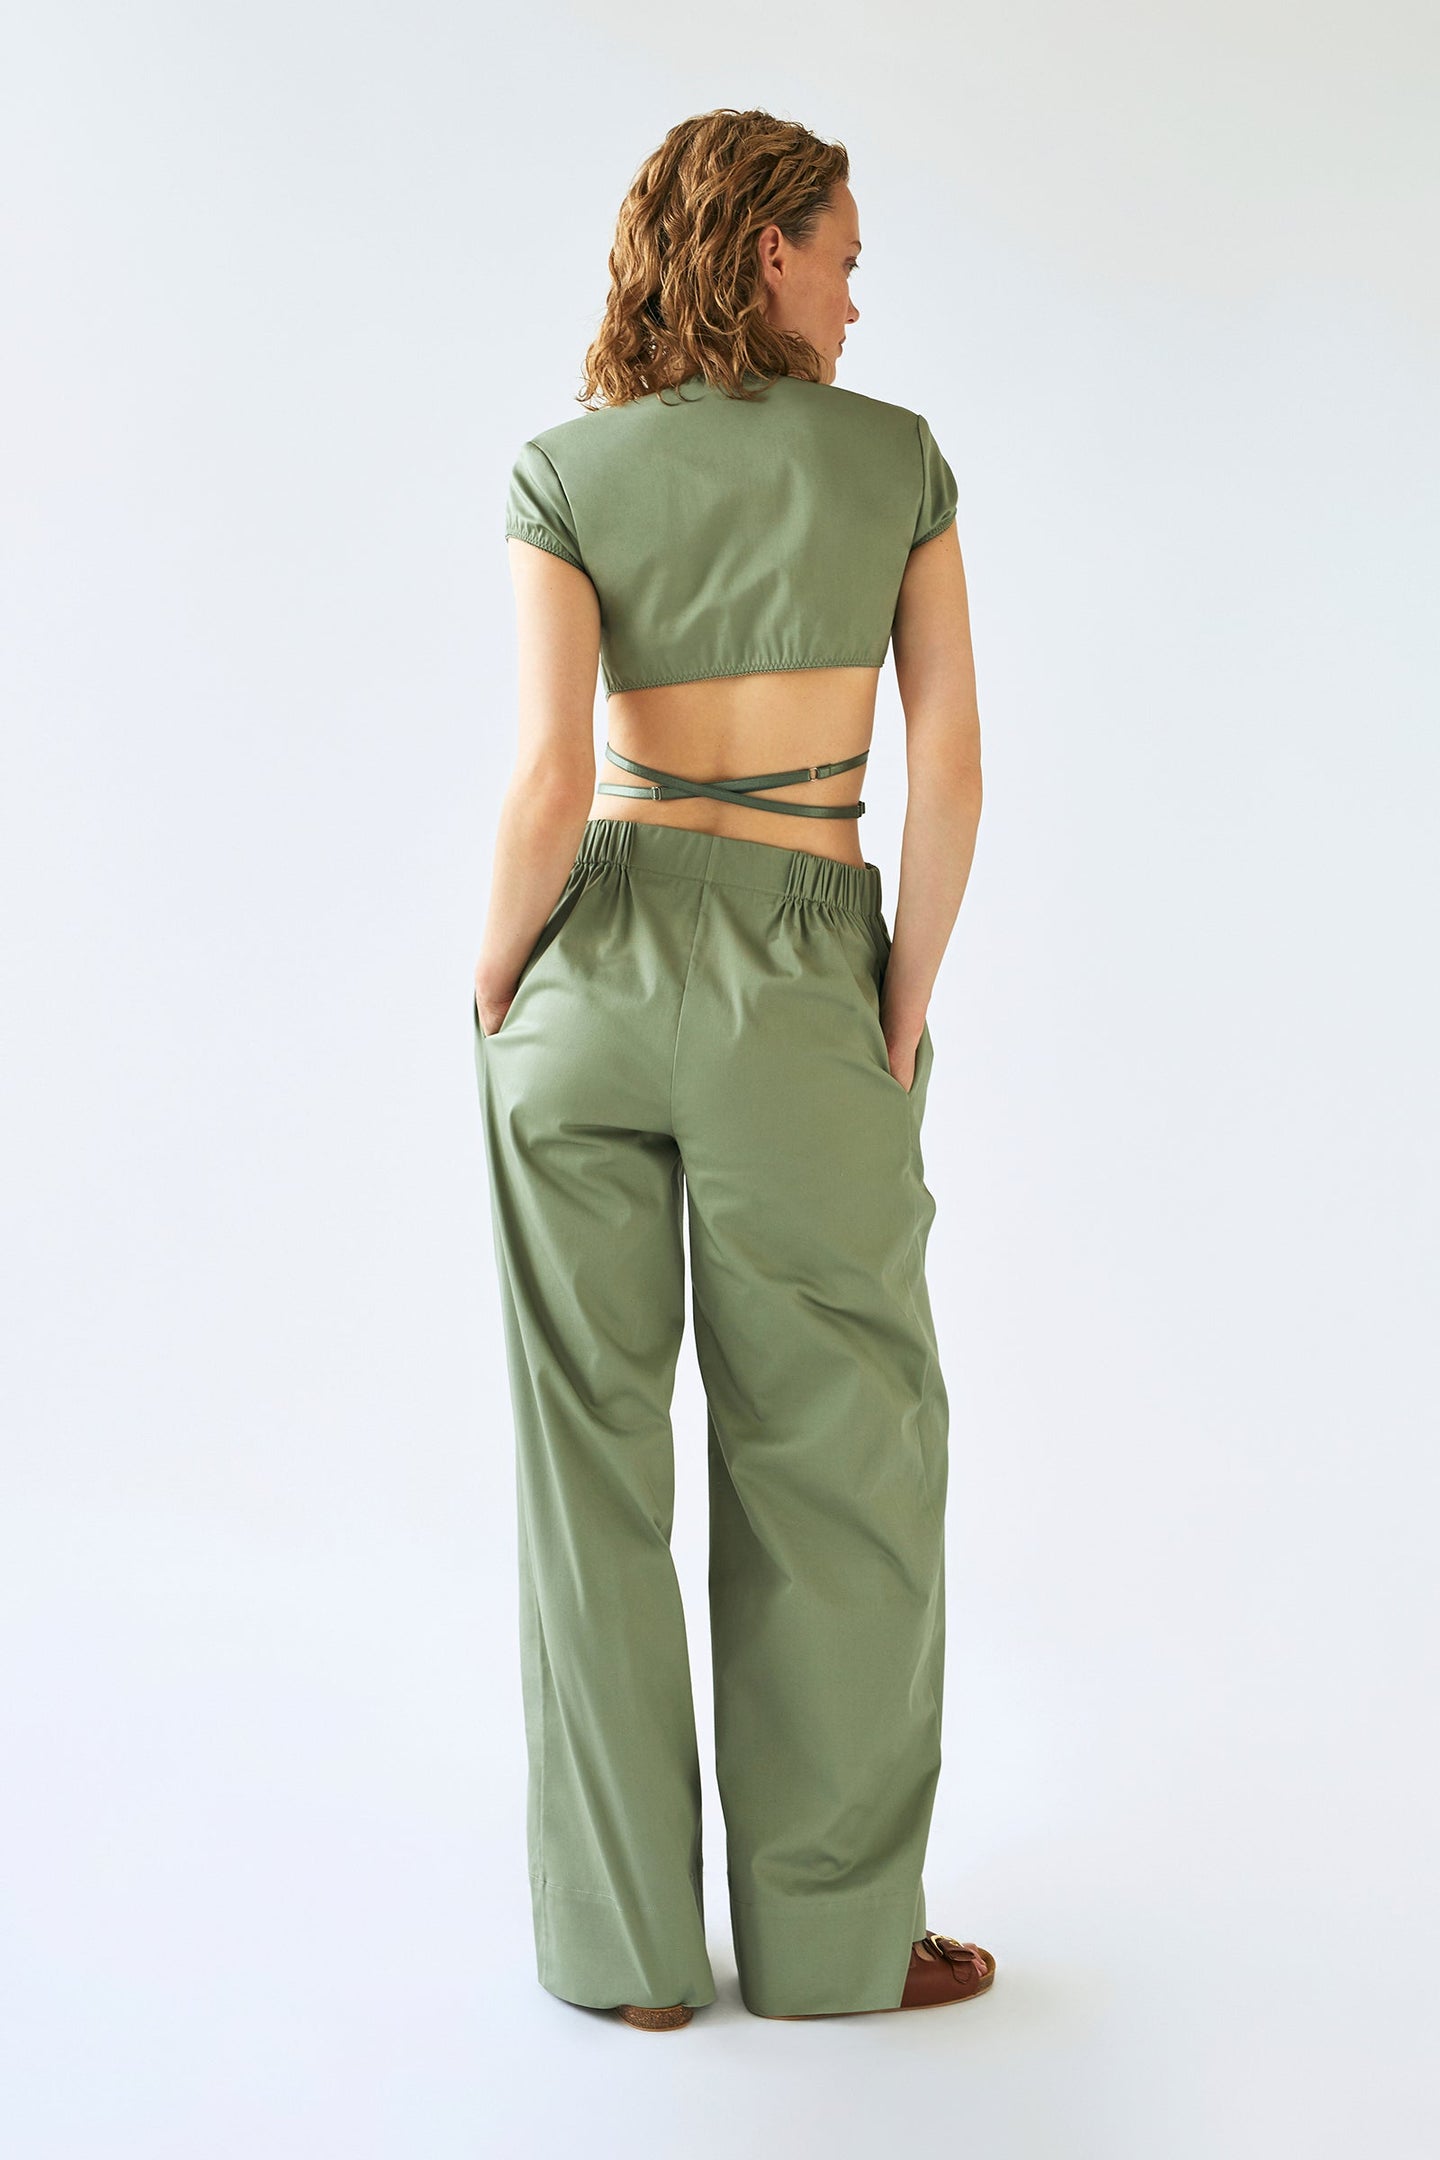 Model in olive Melba trousers